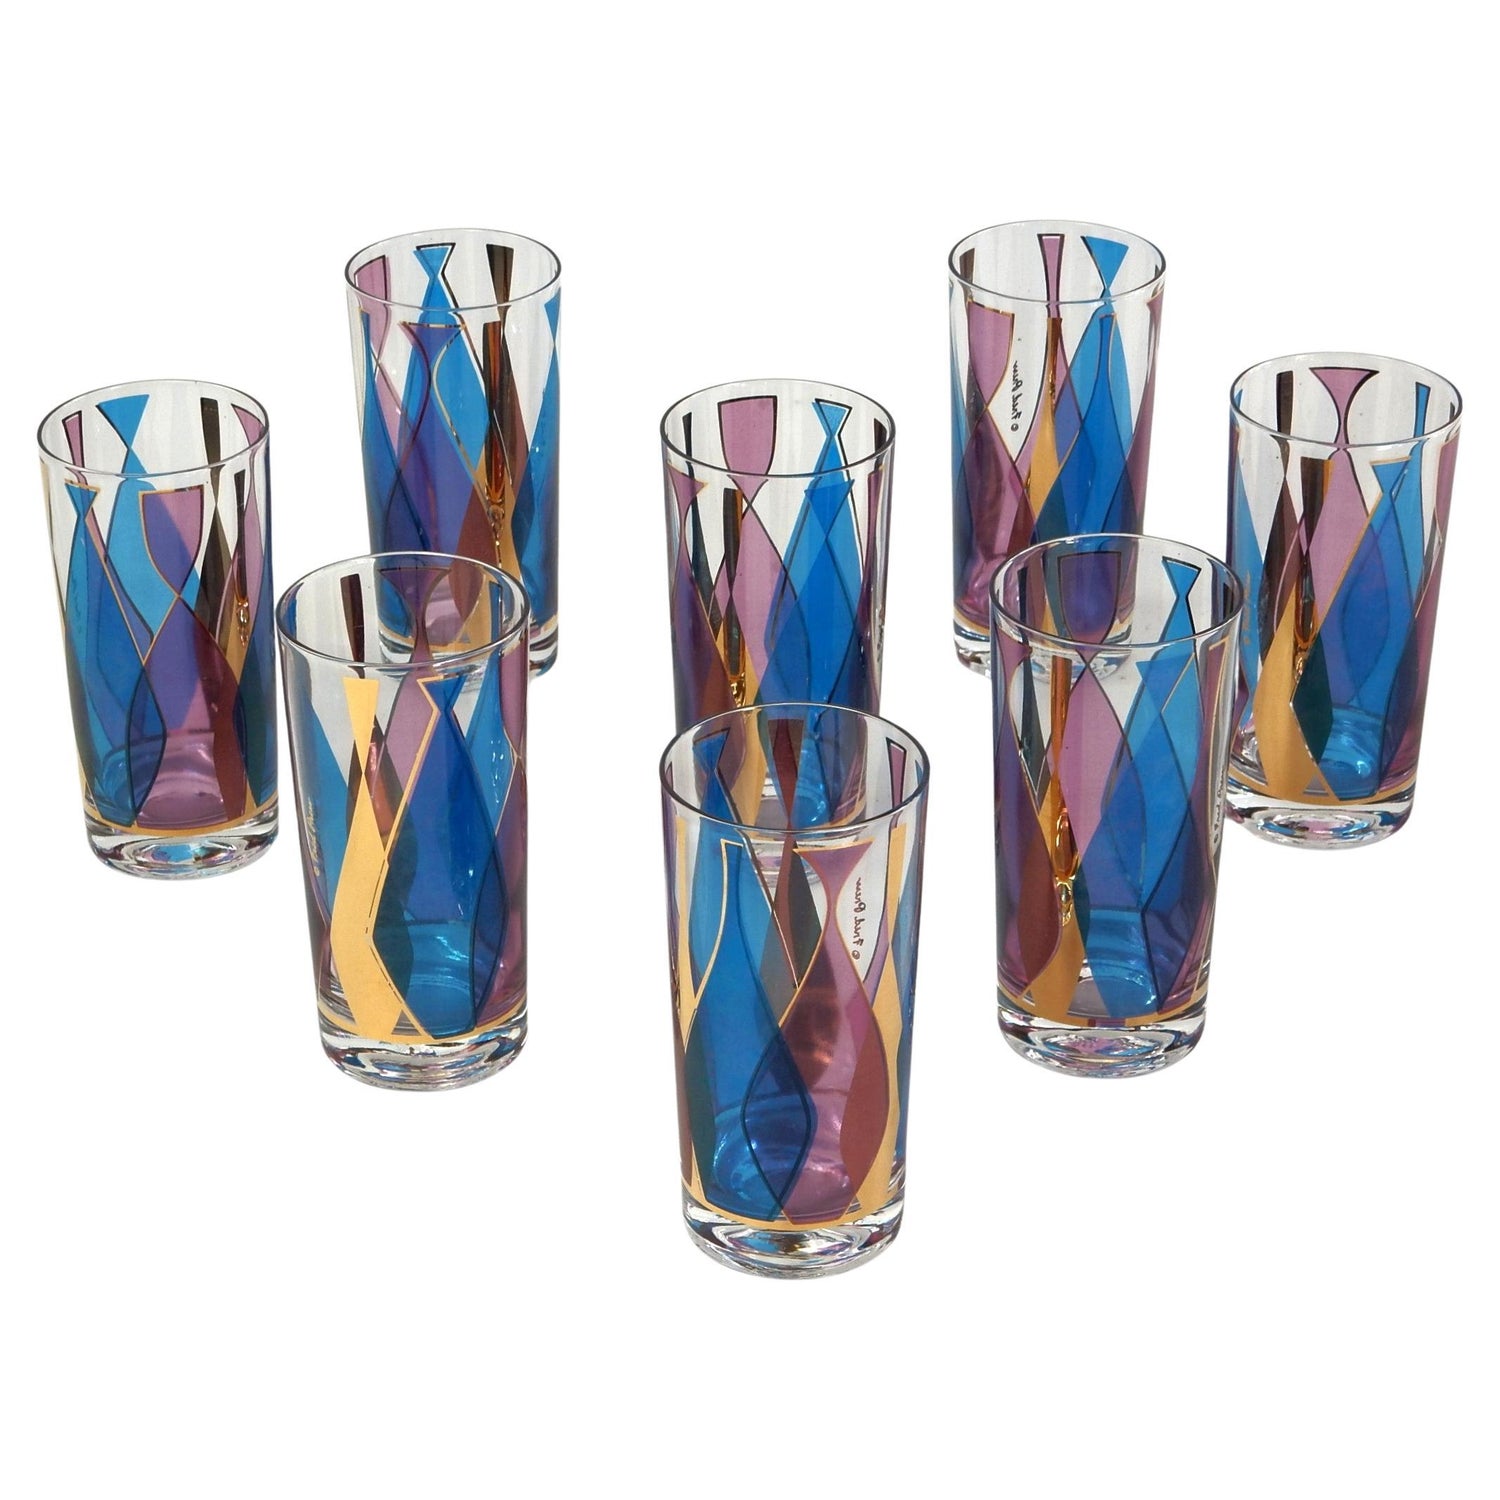 https://a.1stdibscdn.com/vintage-fred-press-barware-glasses-set-mid-century-decanters-for-sale/f_11952/f_370506921699739978531/f_37050692_1699739979299_bg_processed.jpg?width=1500